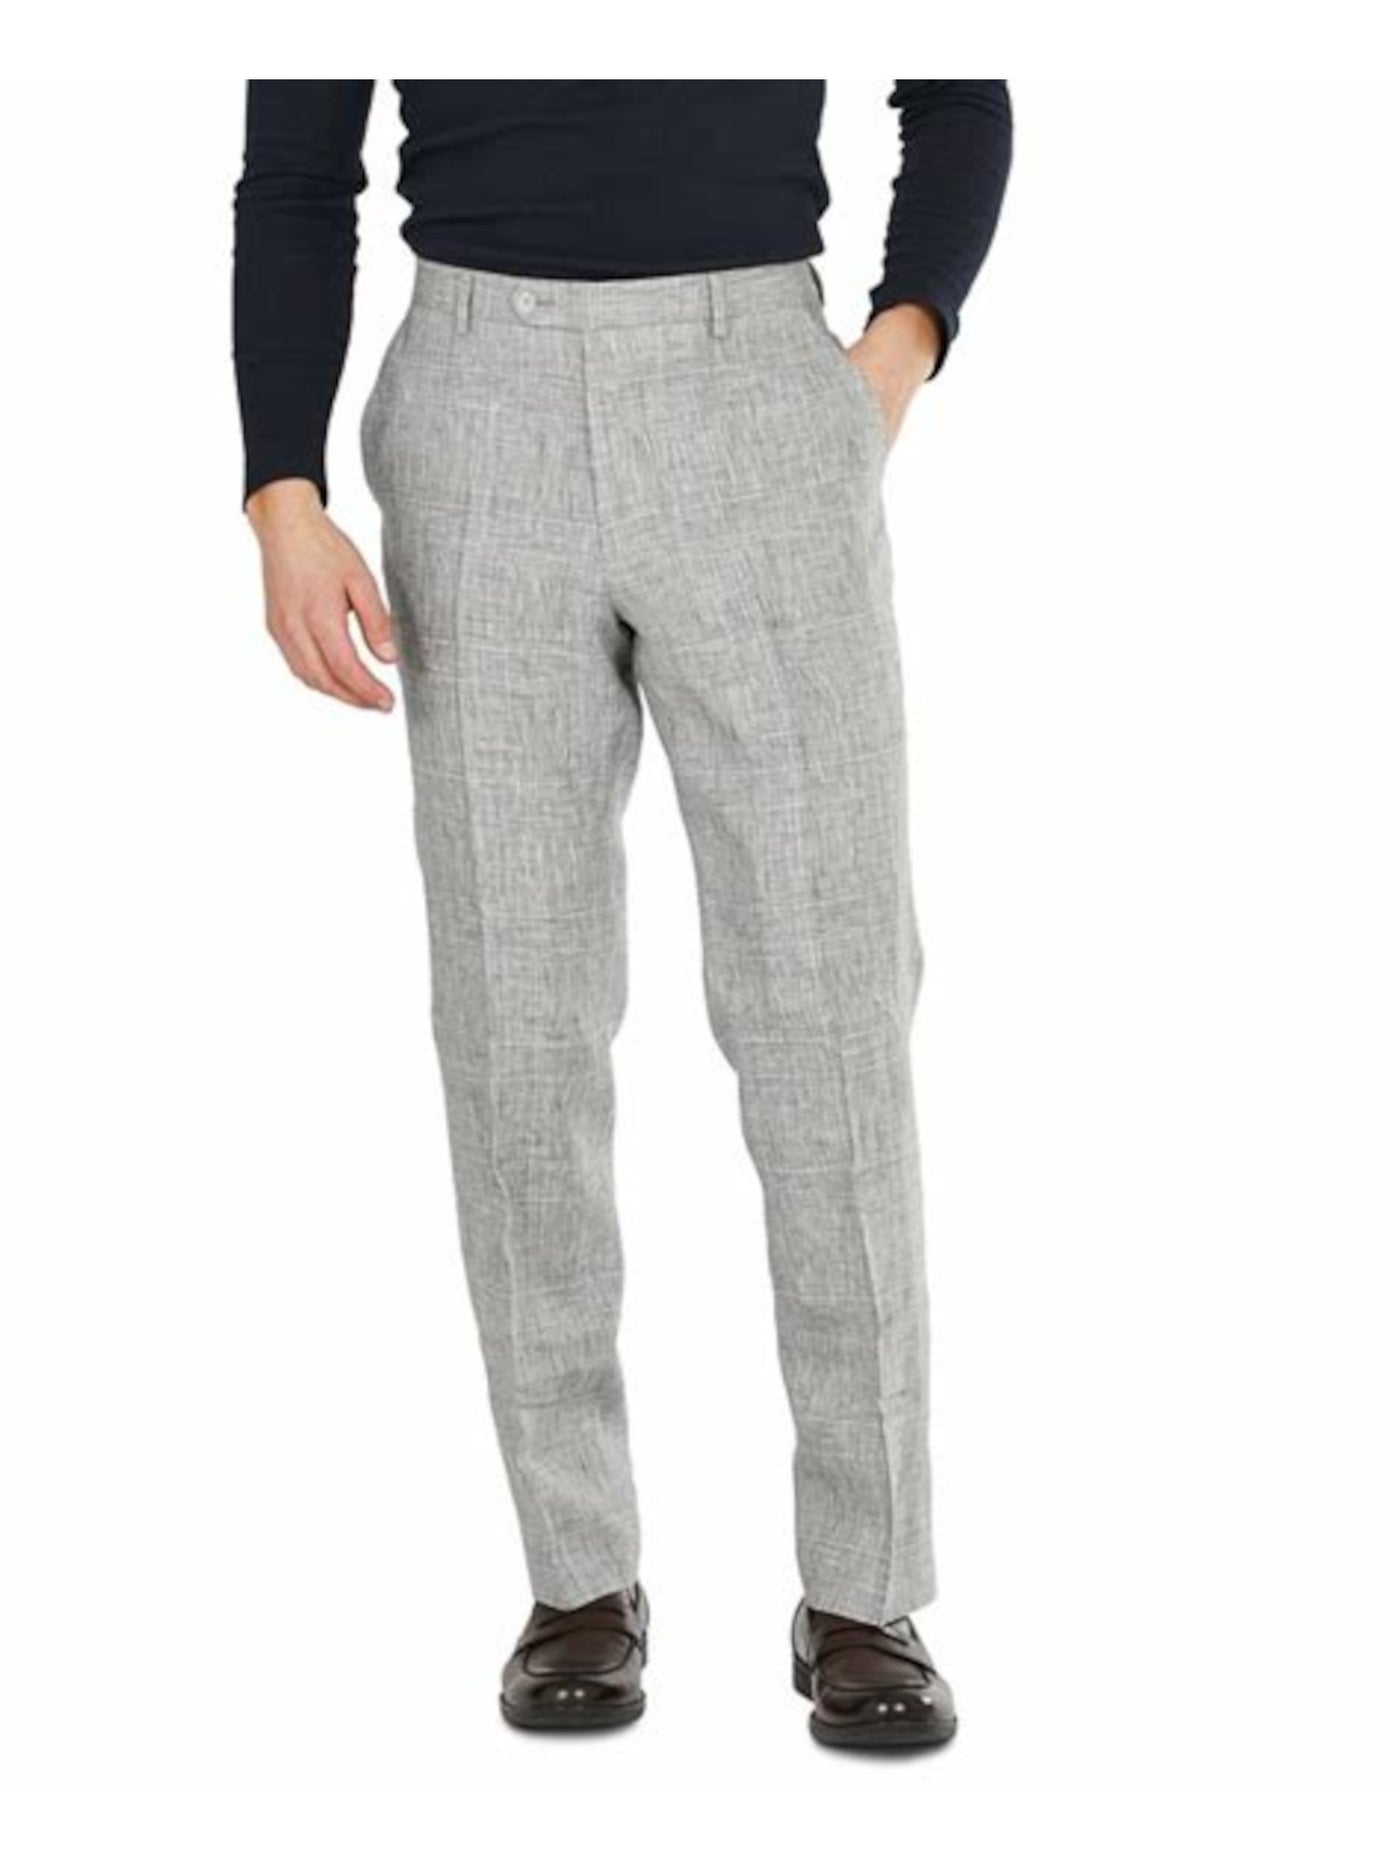 TOMMY HILFIGER Mens Gray Flat Front, Classic Fit Suit Separate Pants 34X34